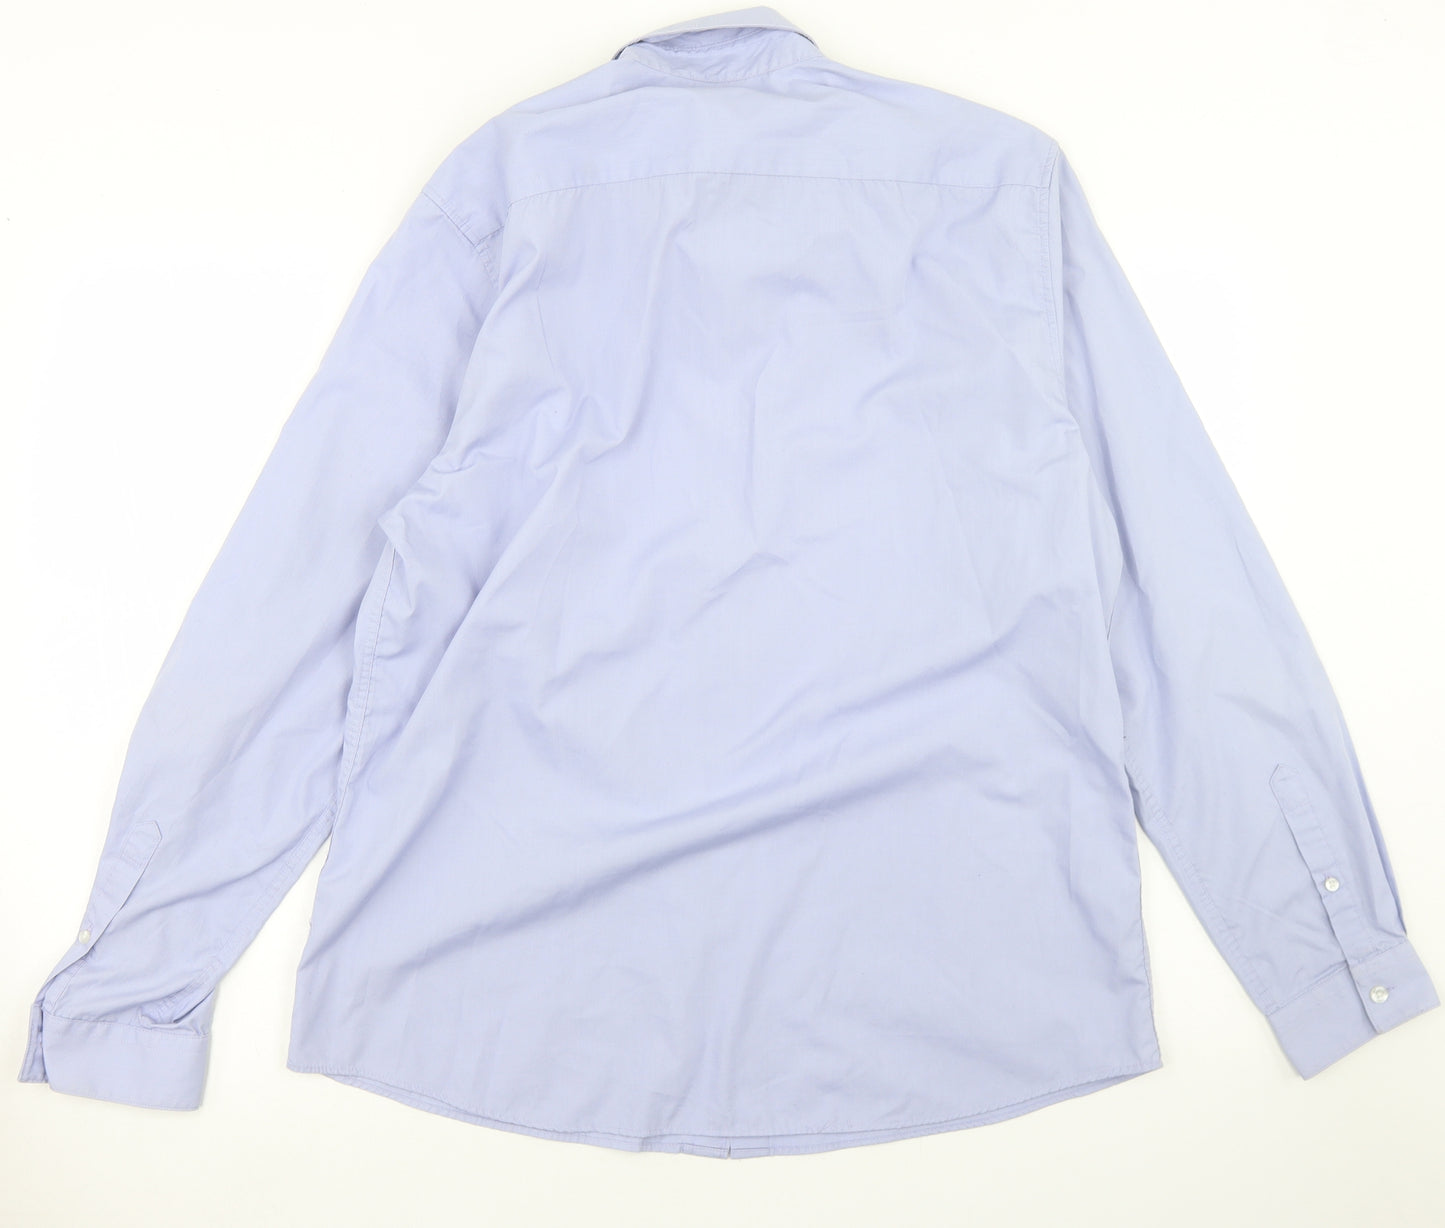 Topman Mens Blue  Polyester  Dress Shirt Size L Collared Button